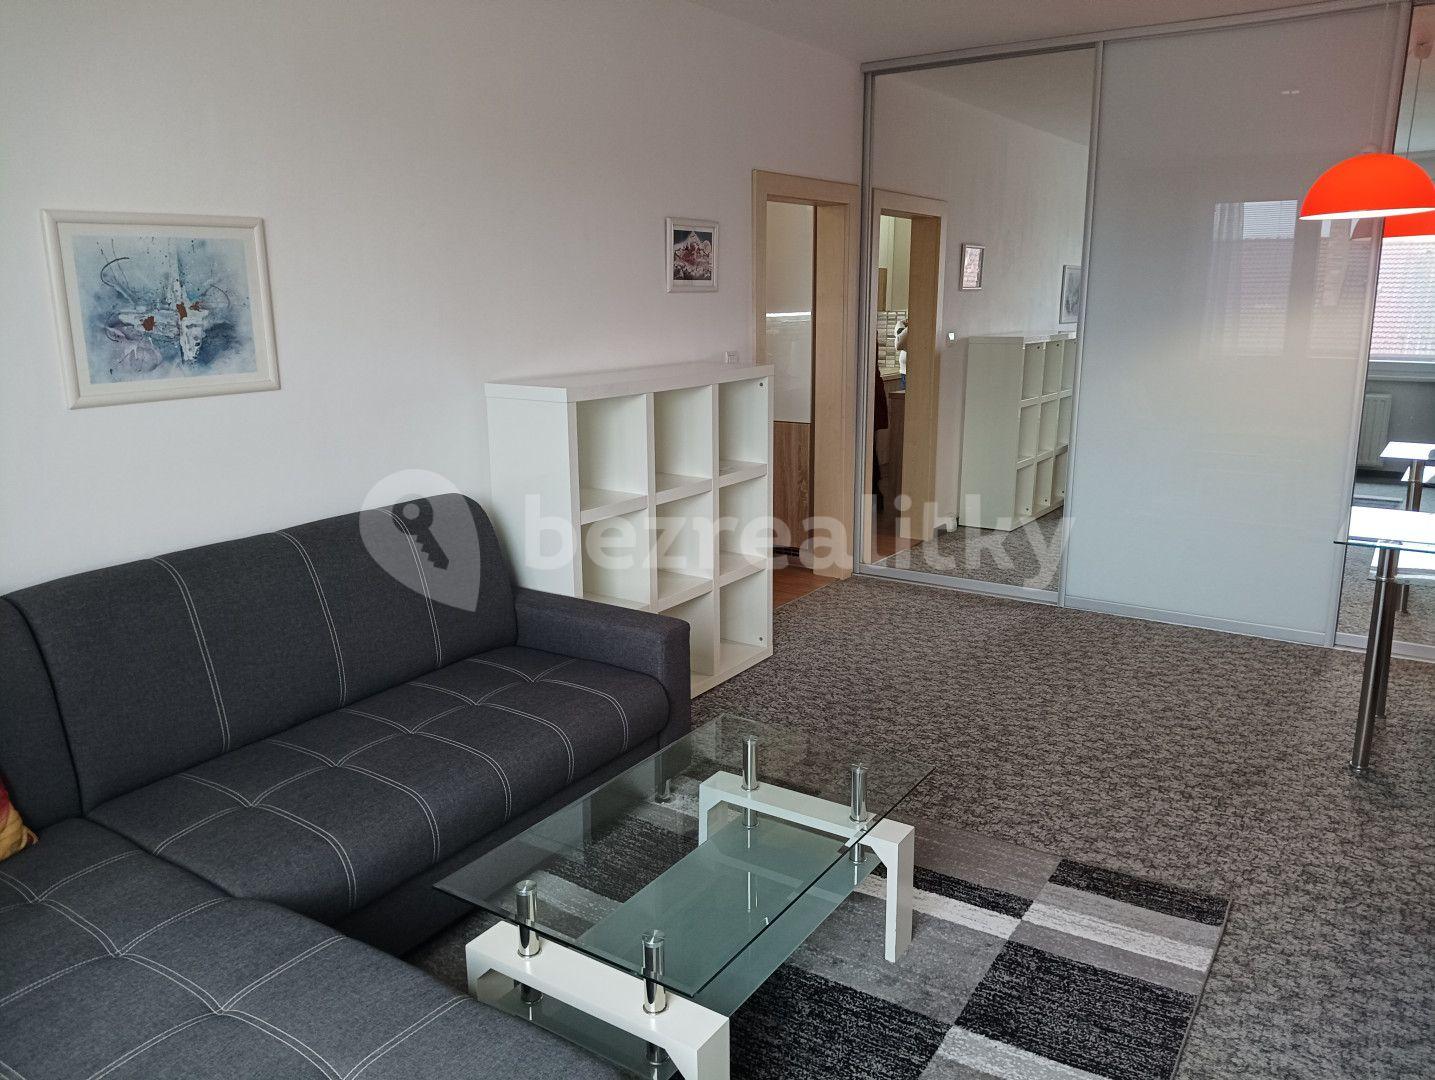 Predaj bytu 2-izbový 43 m², B. Němcové, Protivín, Jihočeský kraj